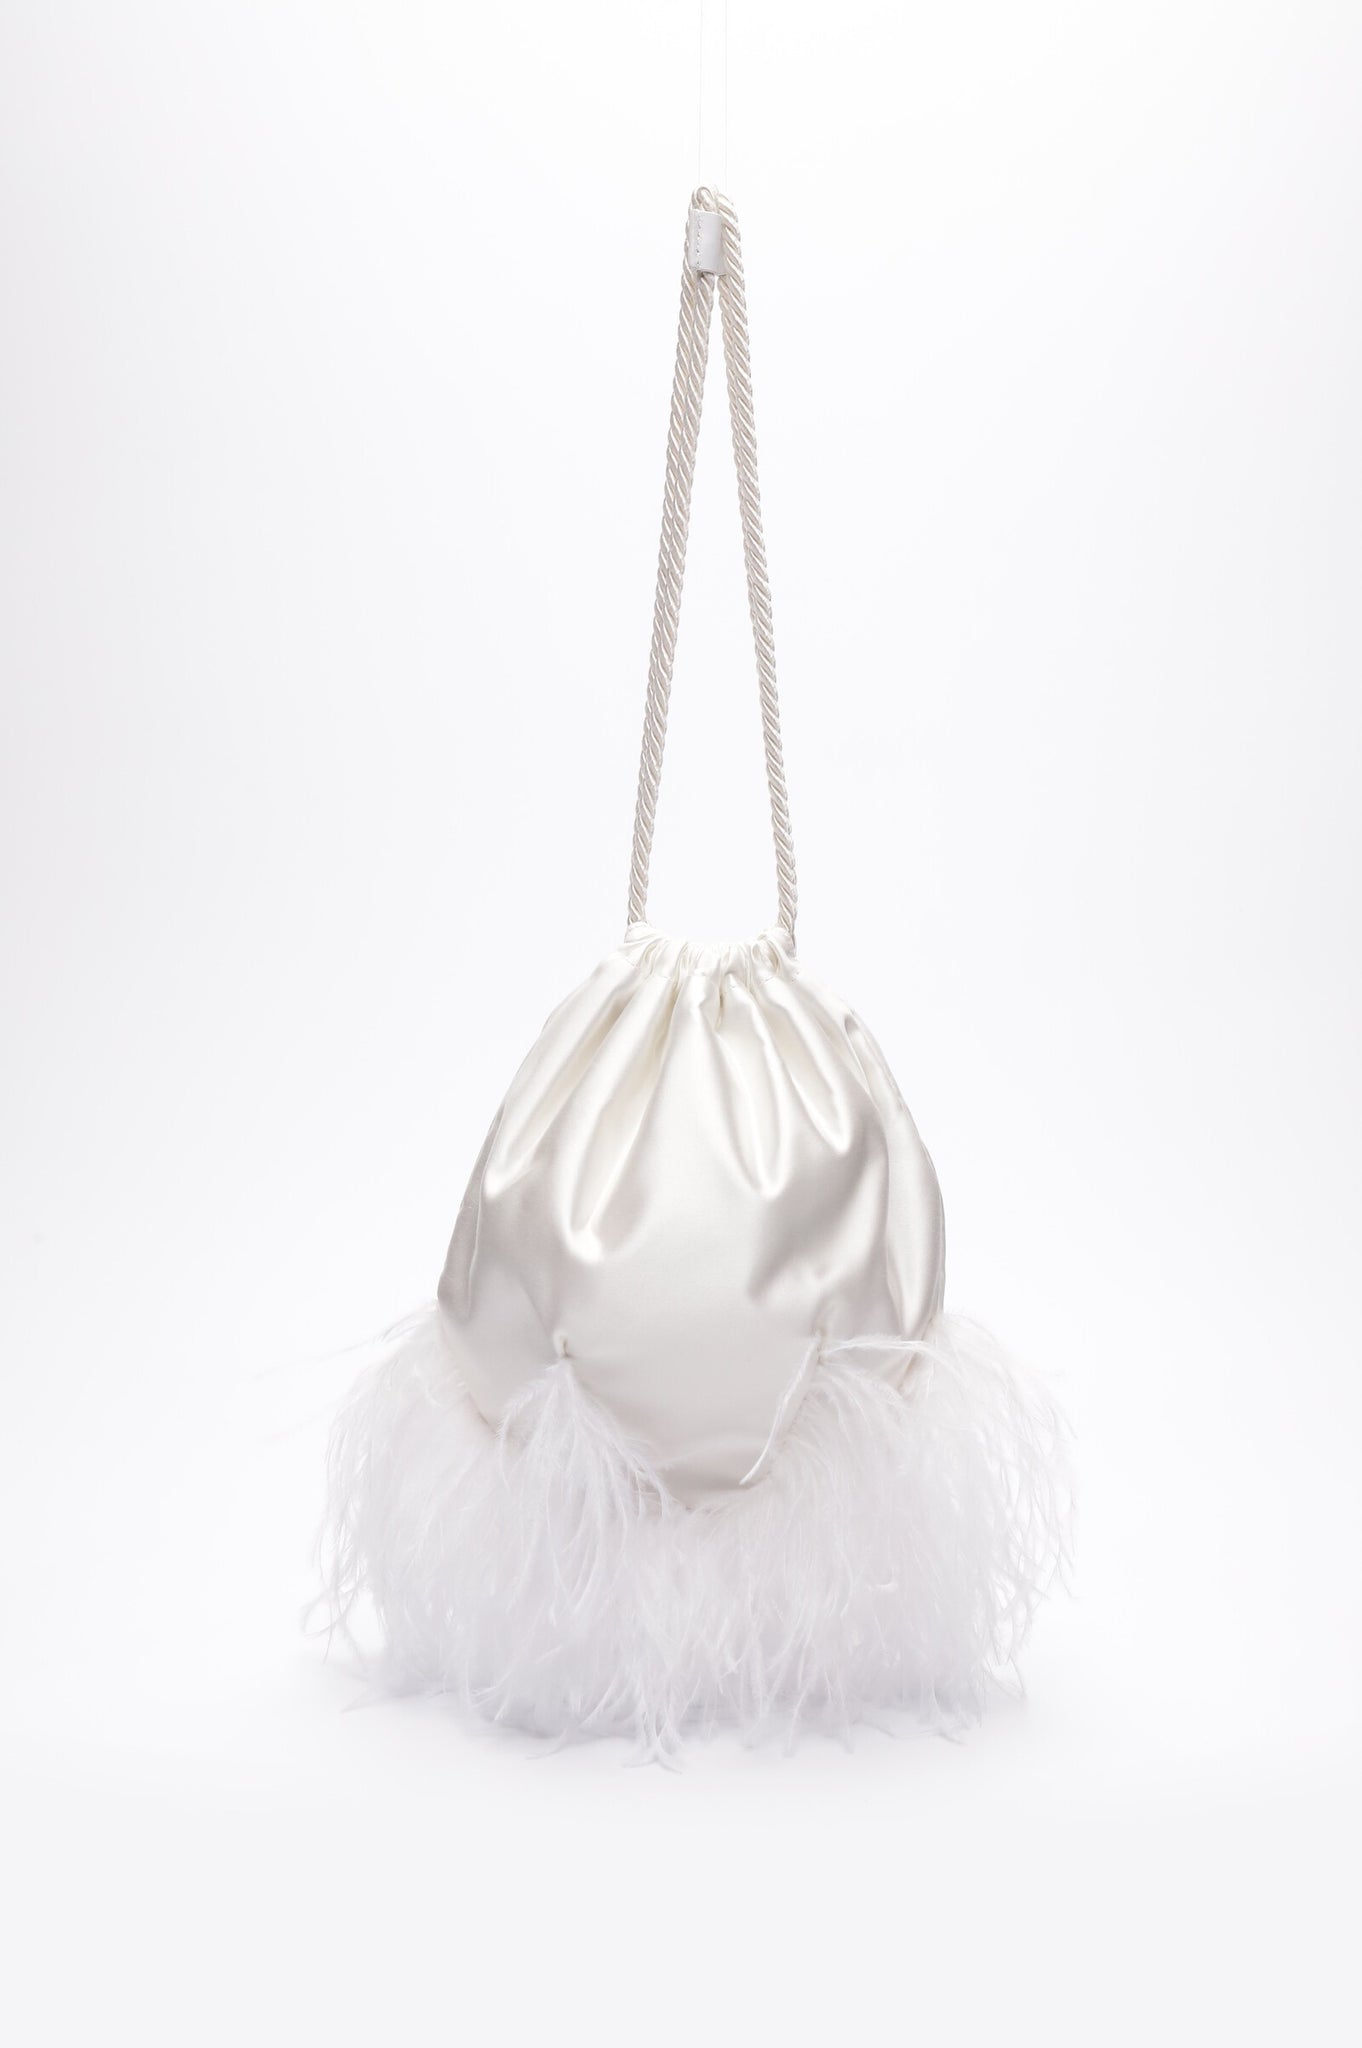 White satin Sarah Drawstring handbag with with feathers.